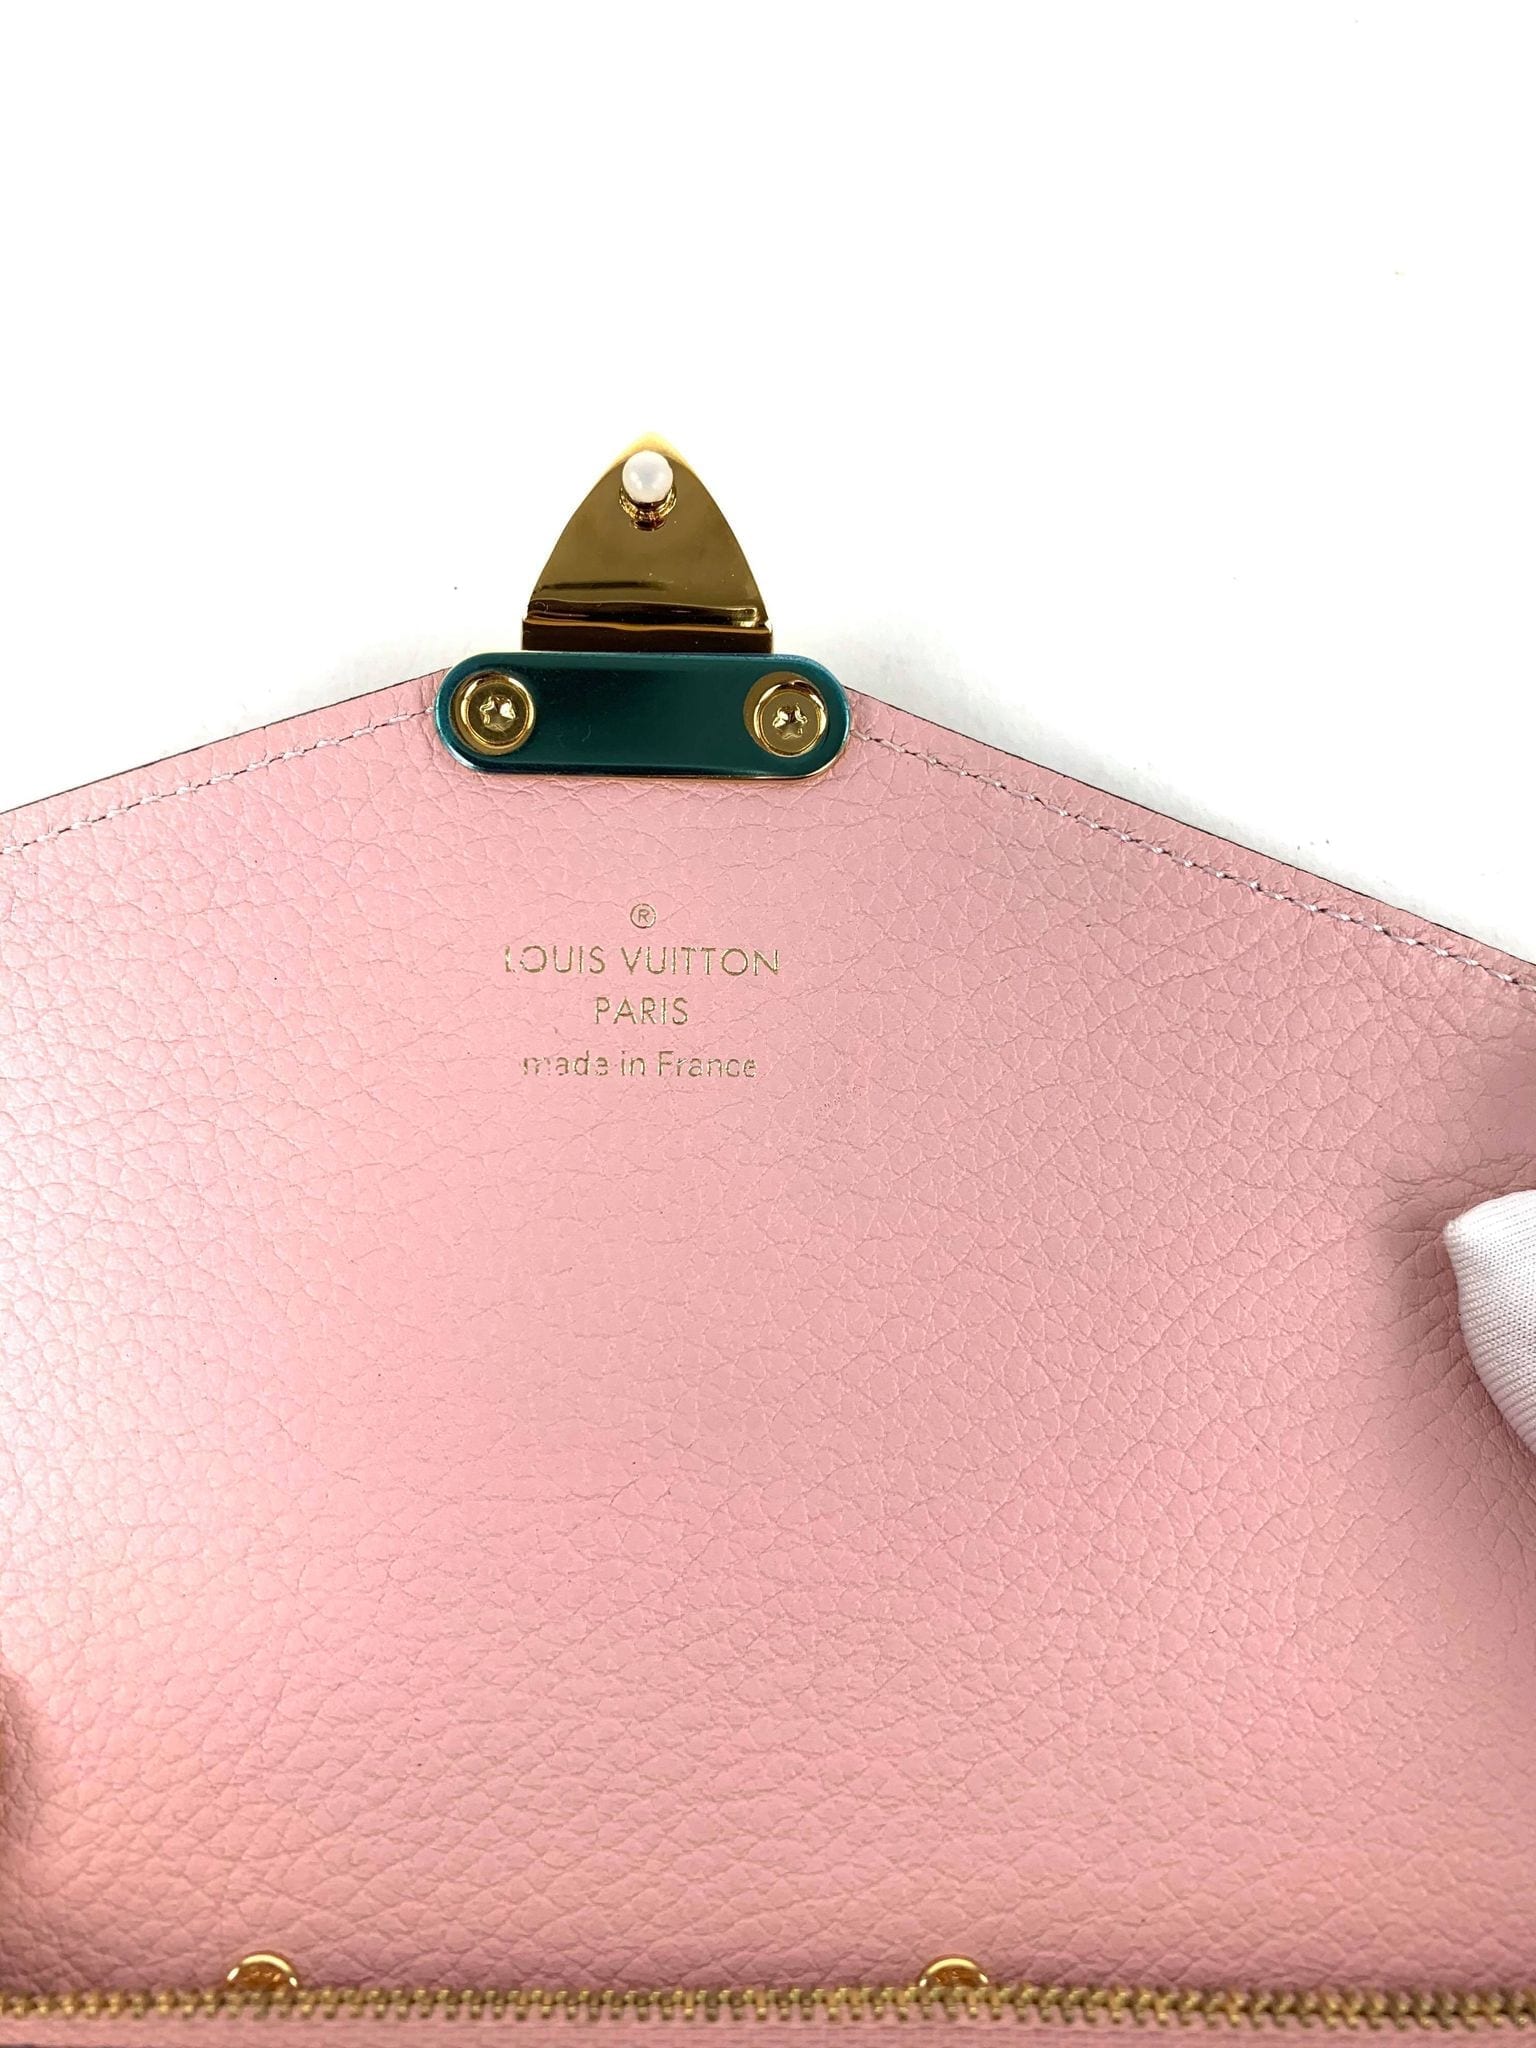 Louis Vuitton Catogram Black Epi Dog Bag Charm - A World Of Goods